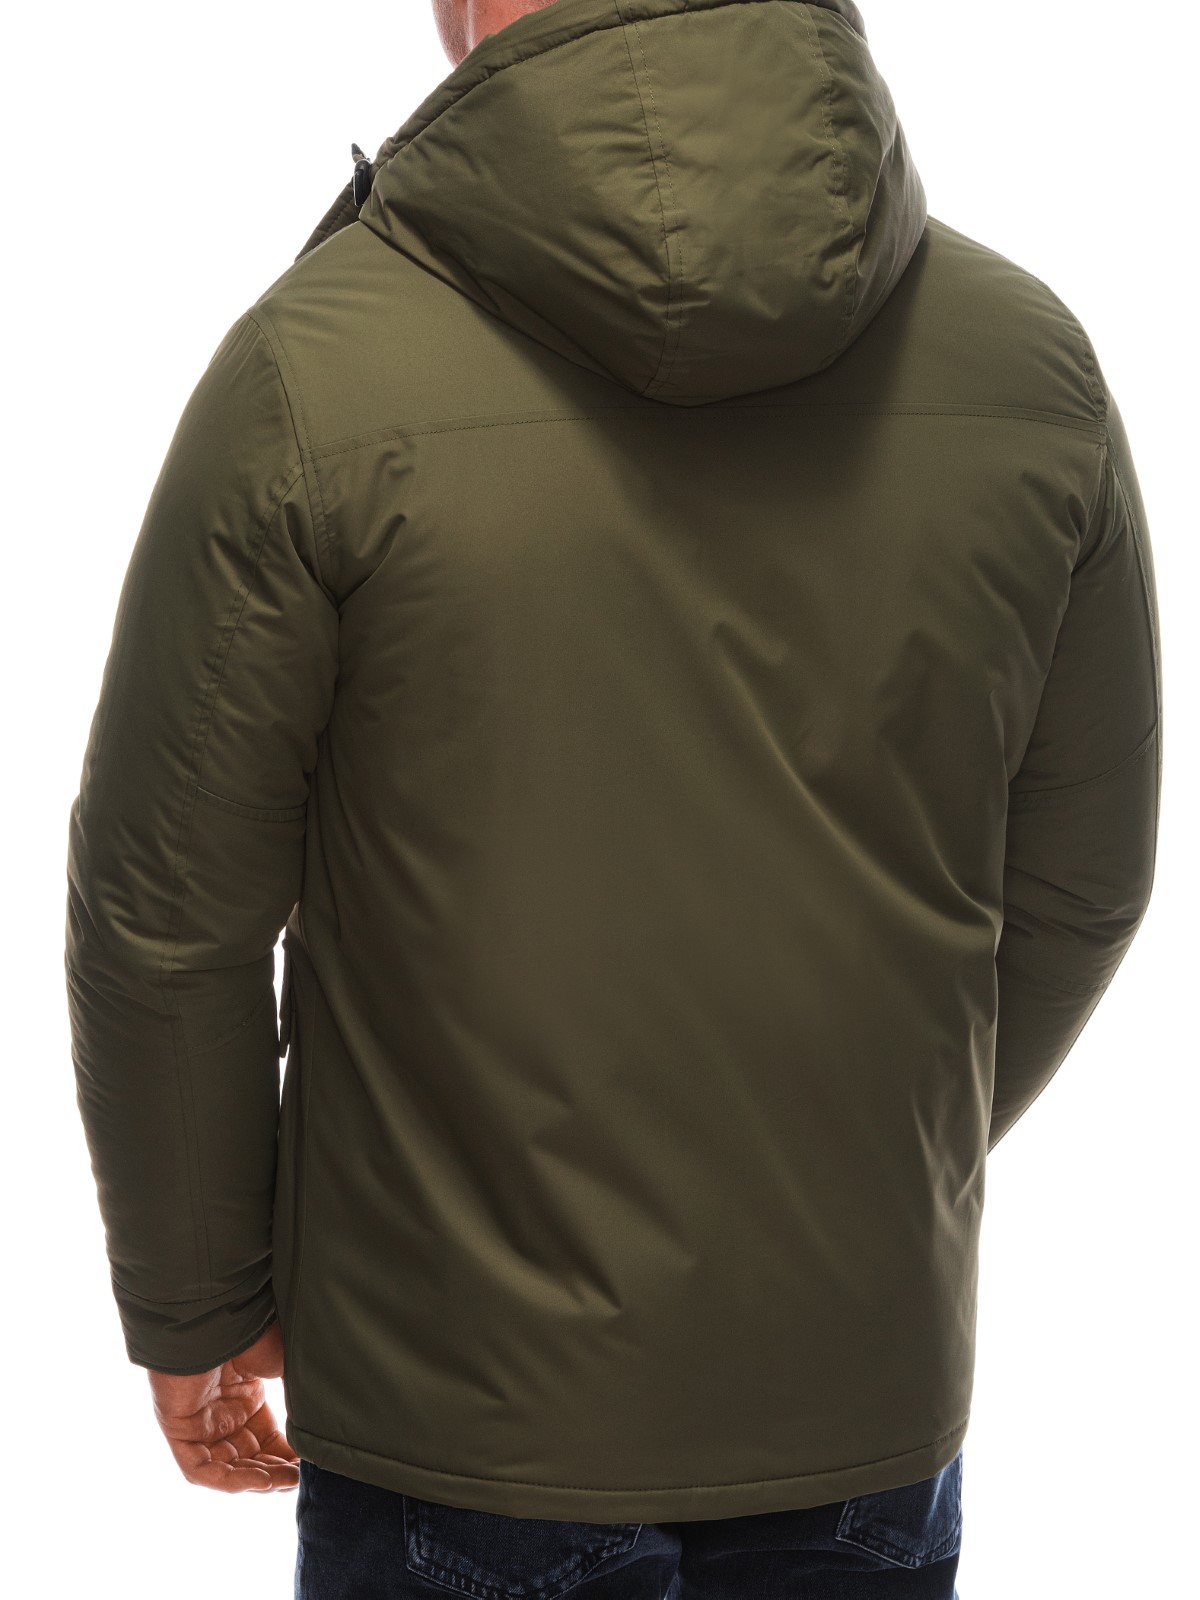 Men's winter jacket C530 - dark olive | MODONE wholesale - Clothing For Men